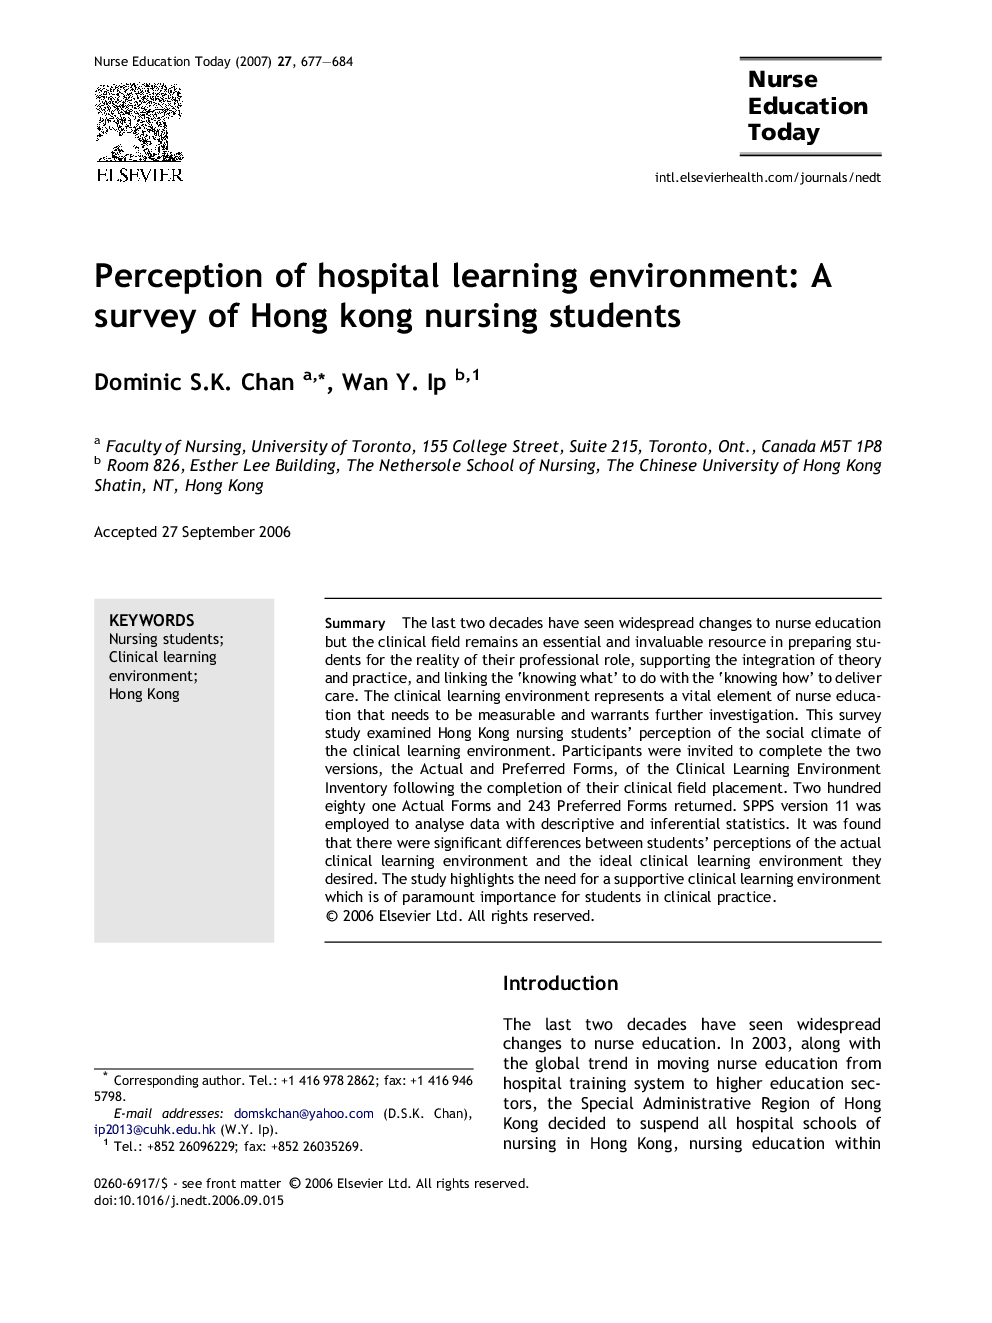 Perception of hospital learning environment: A survey of Hong kong nursing students